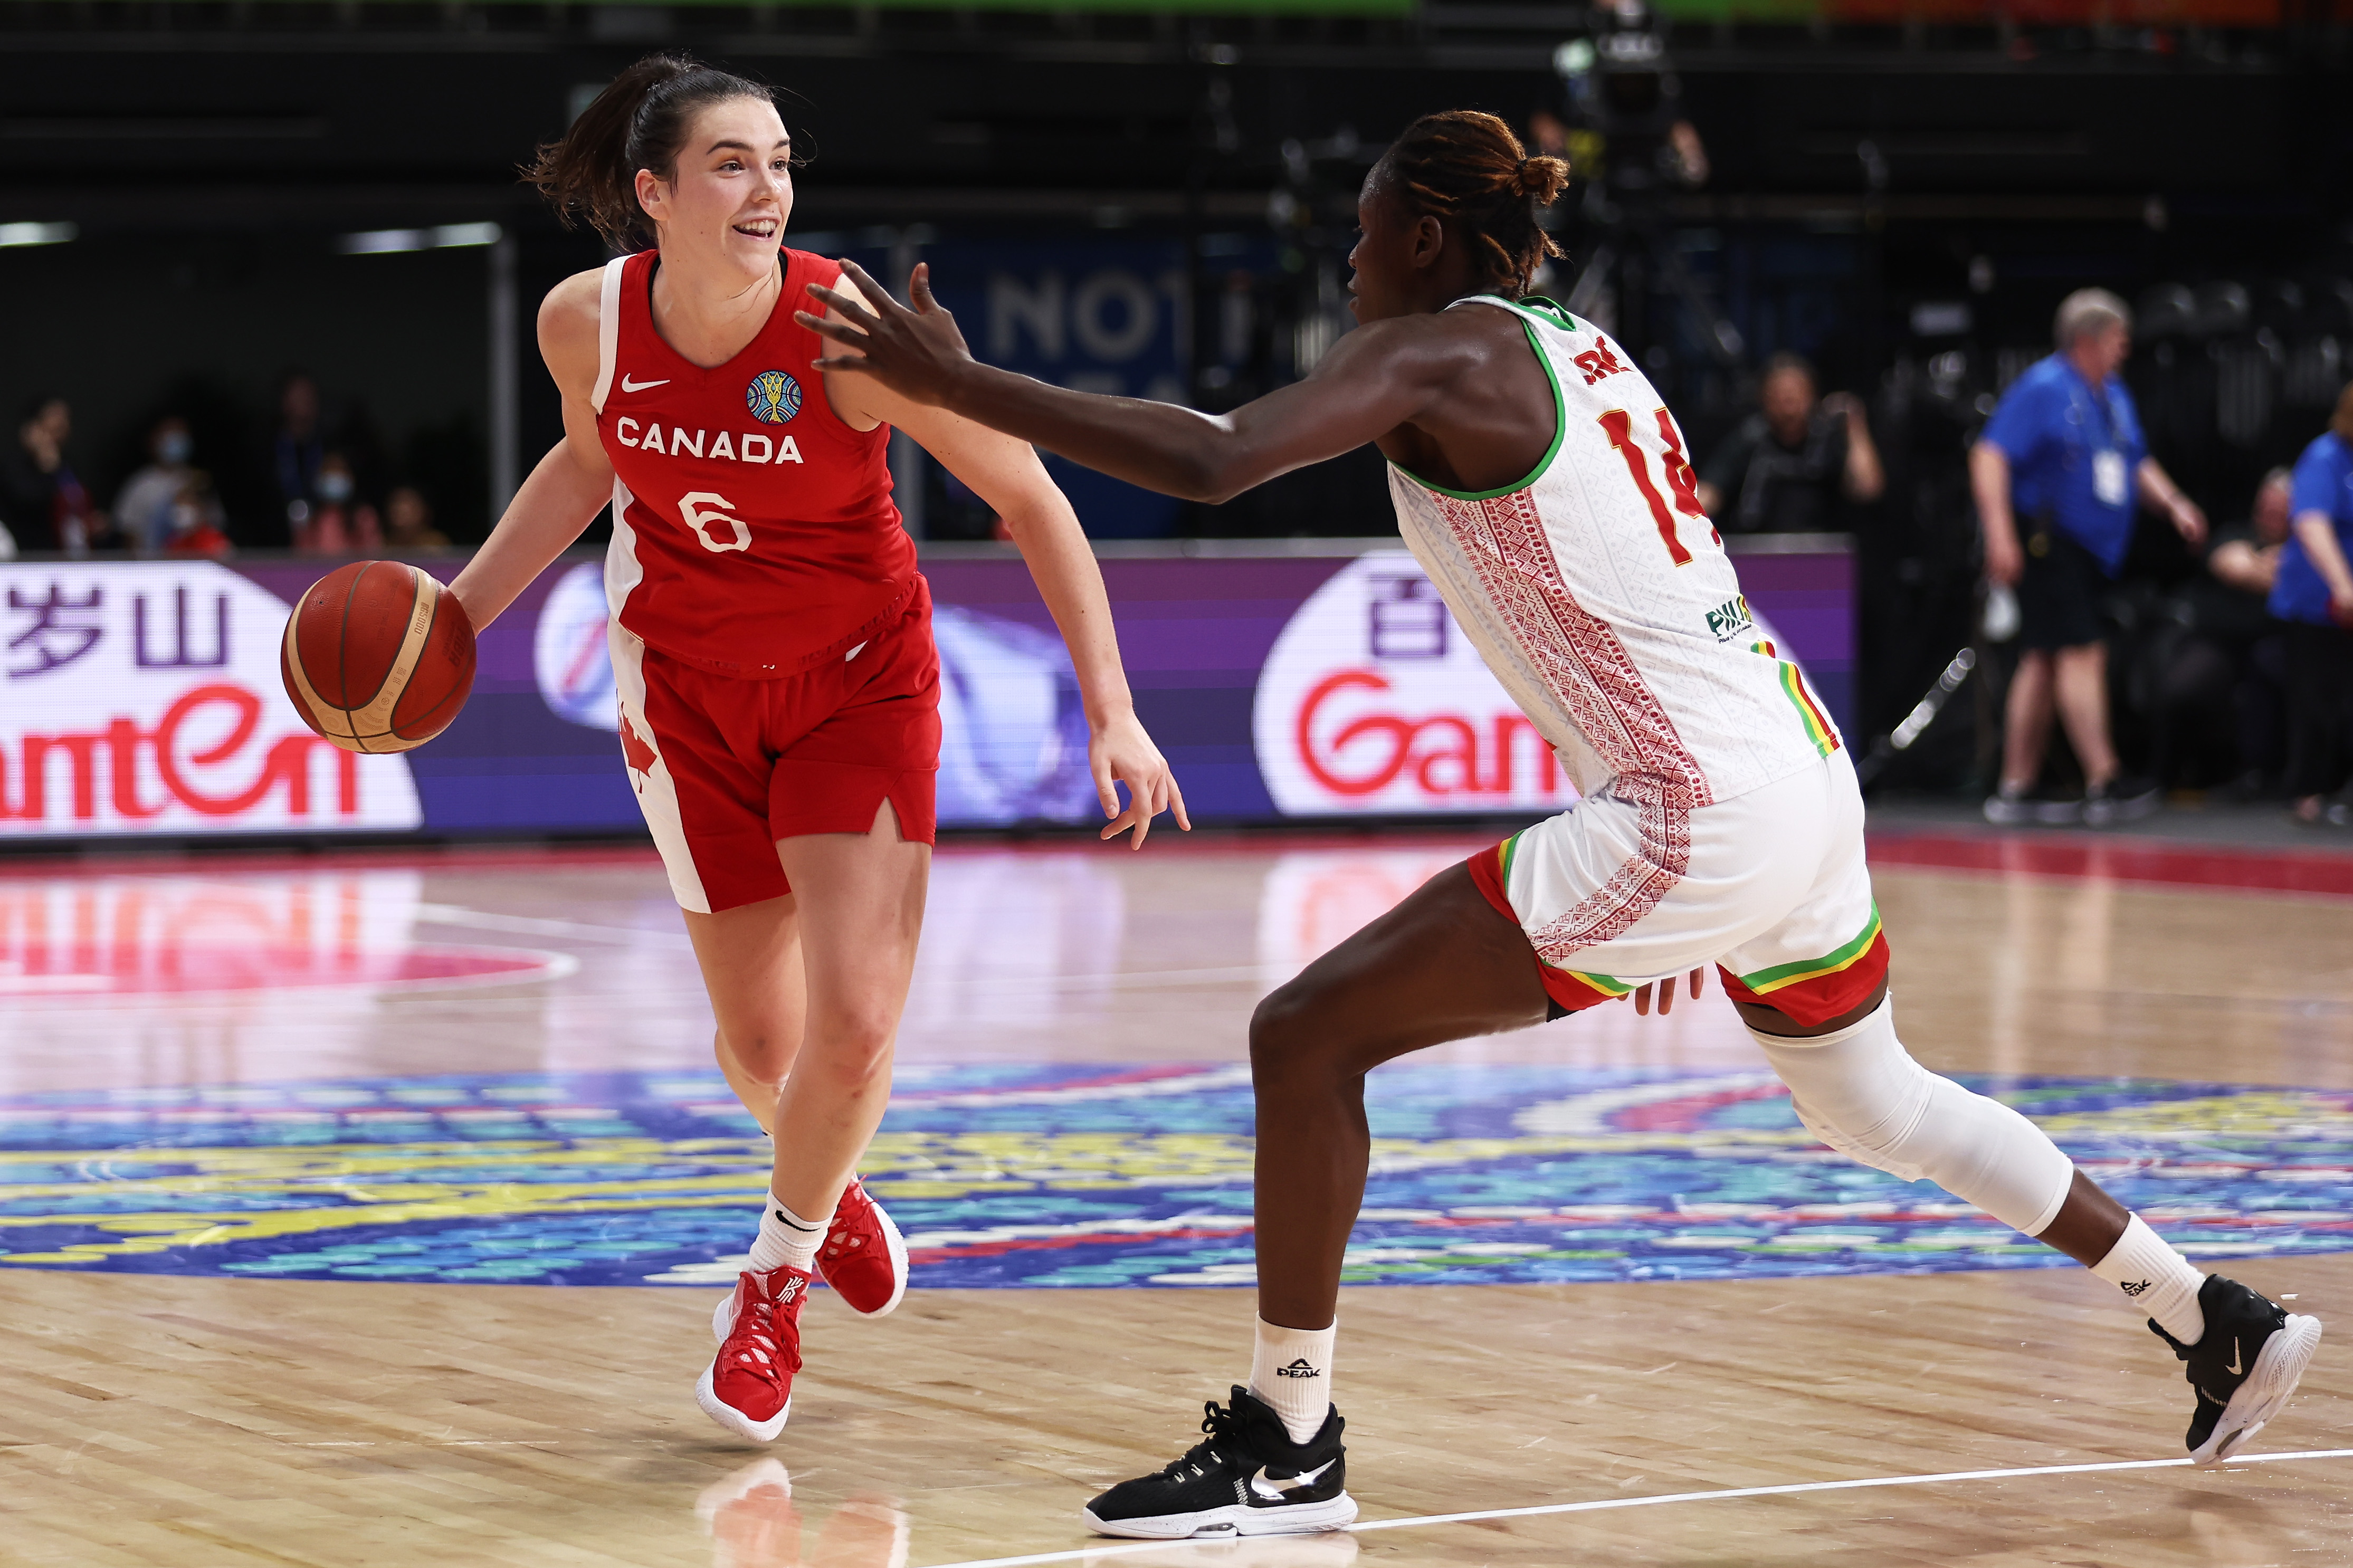 Mali v Canada - FIBA Women’s Basketball World Cup